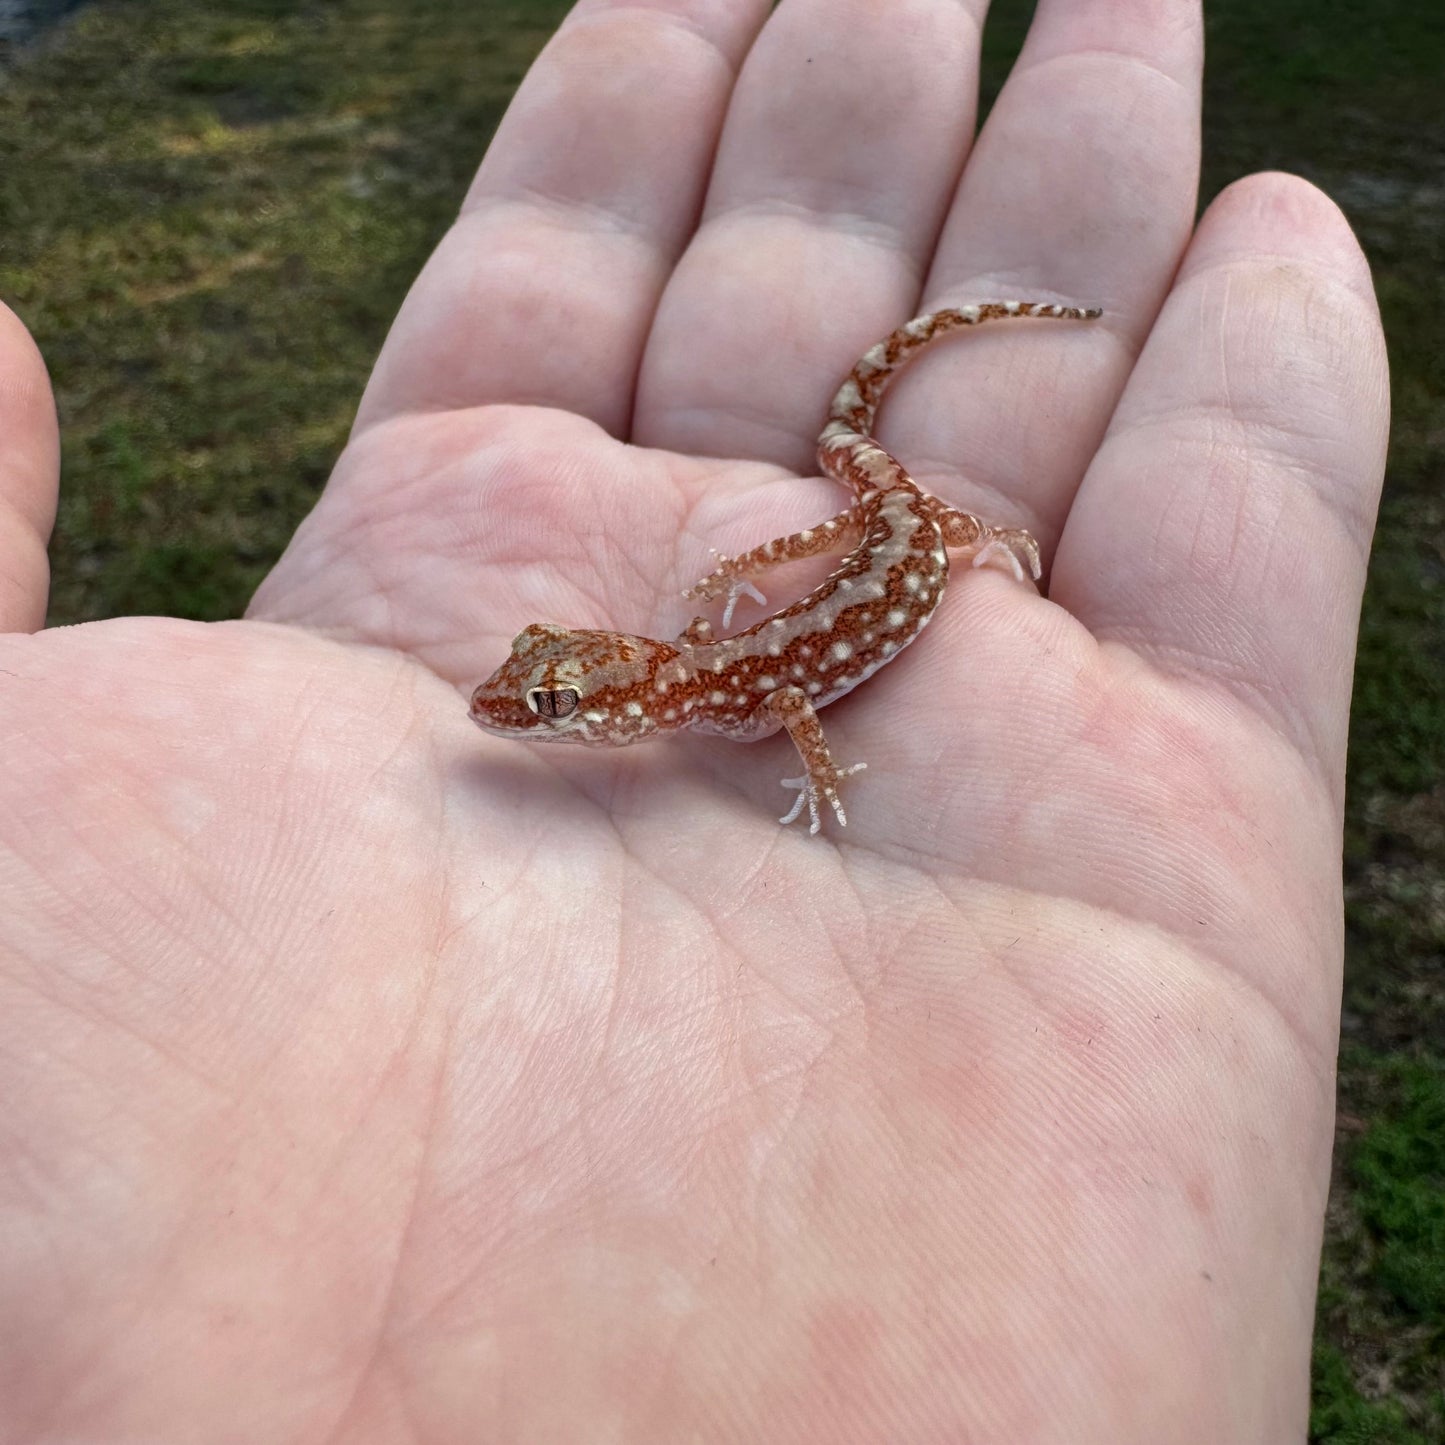 Baby Australian Beaded Gecko